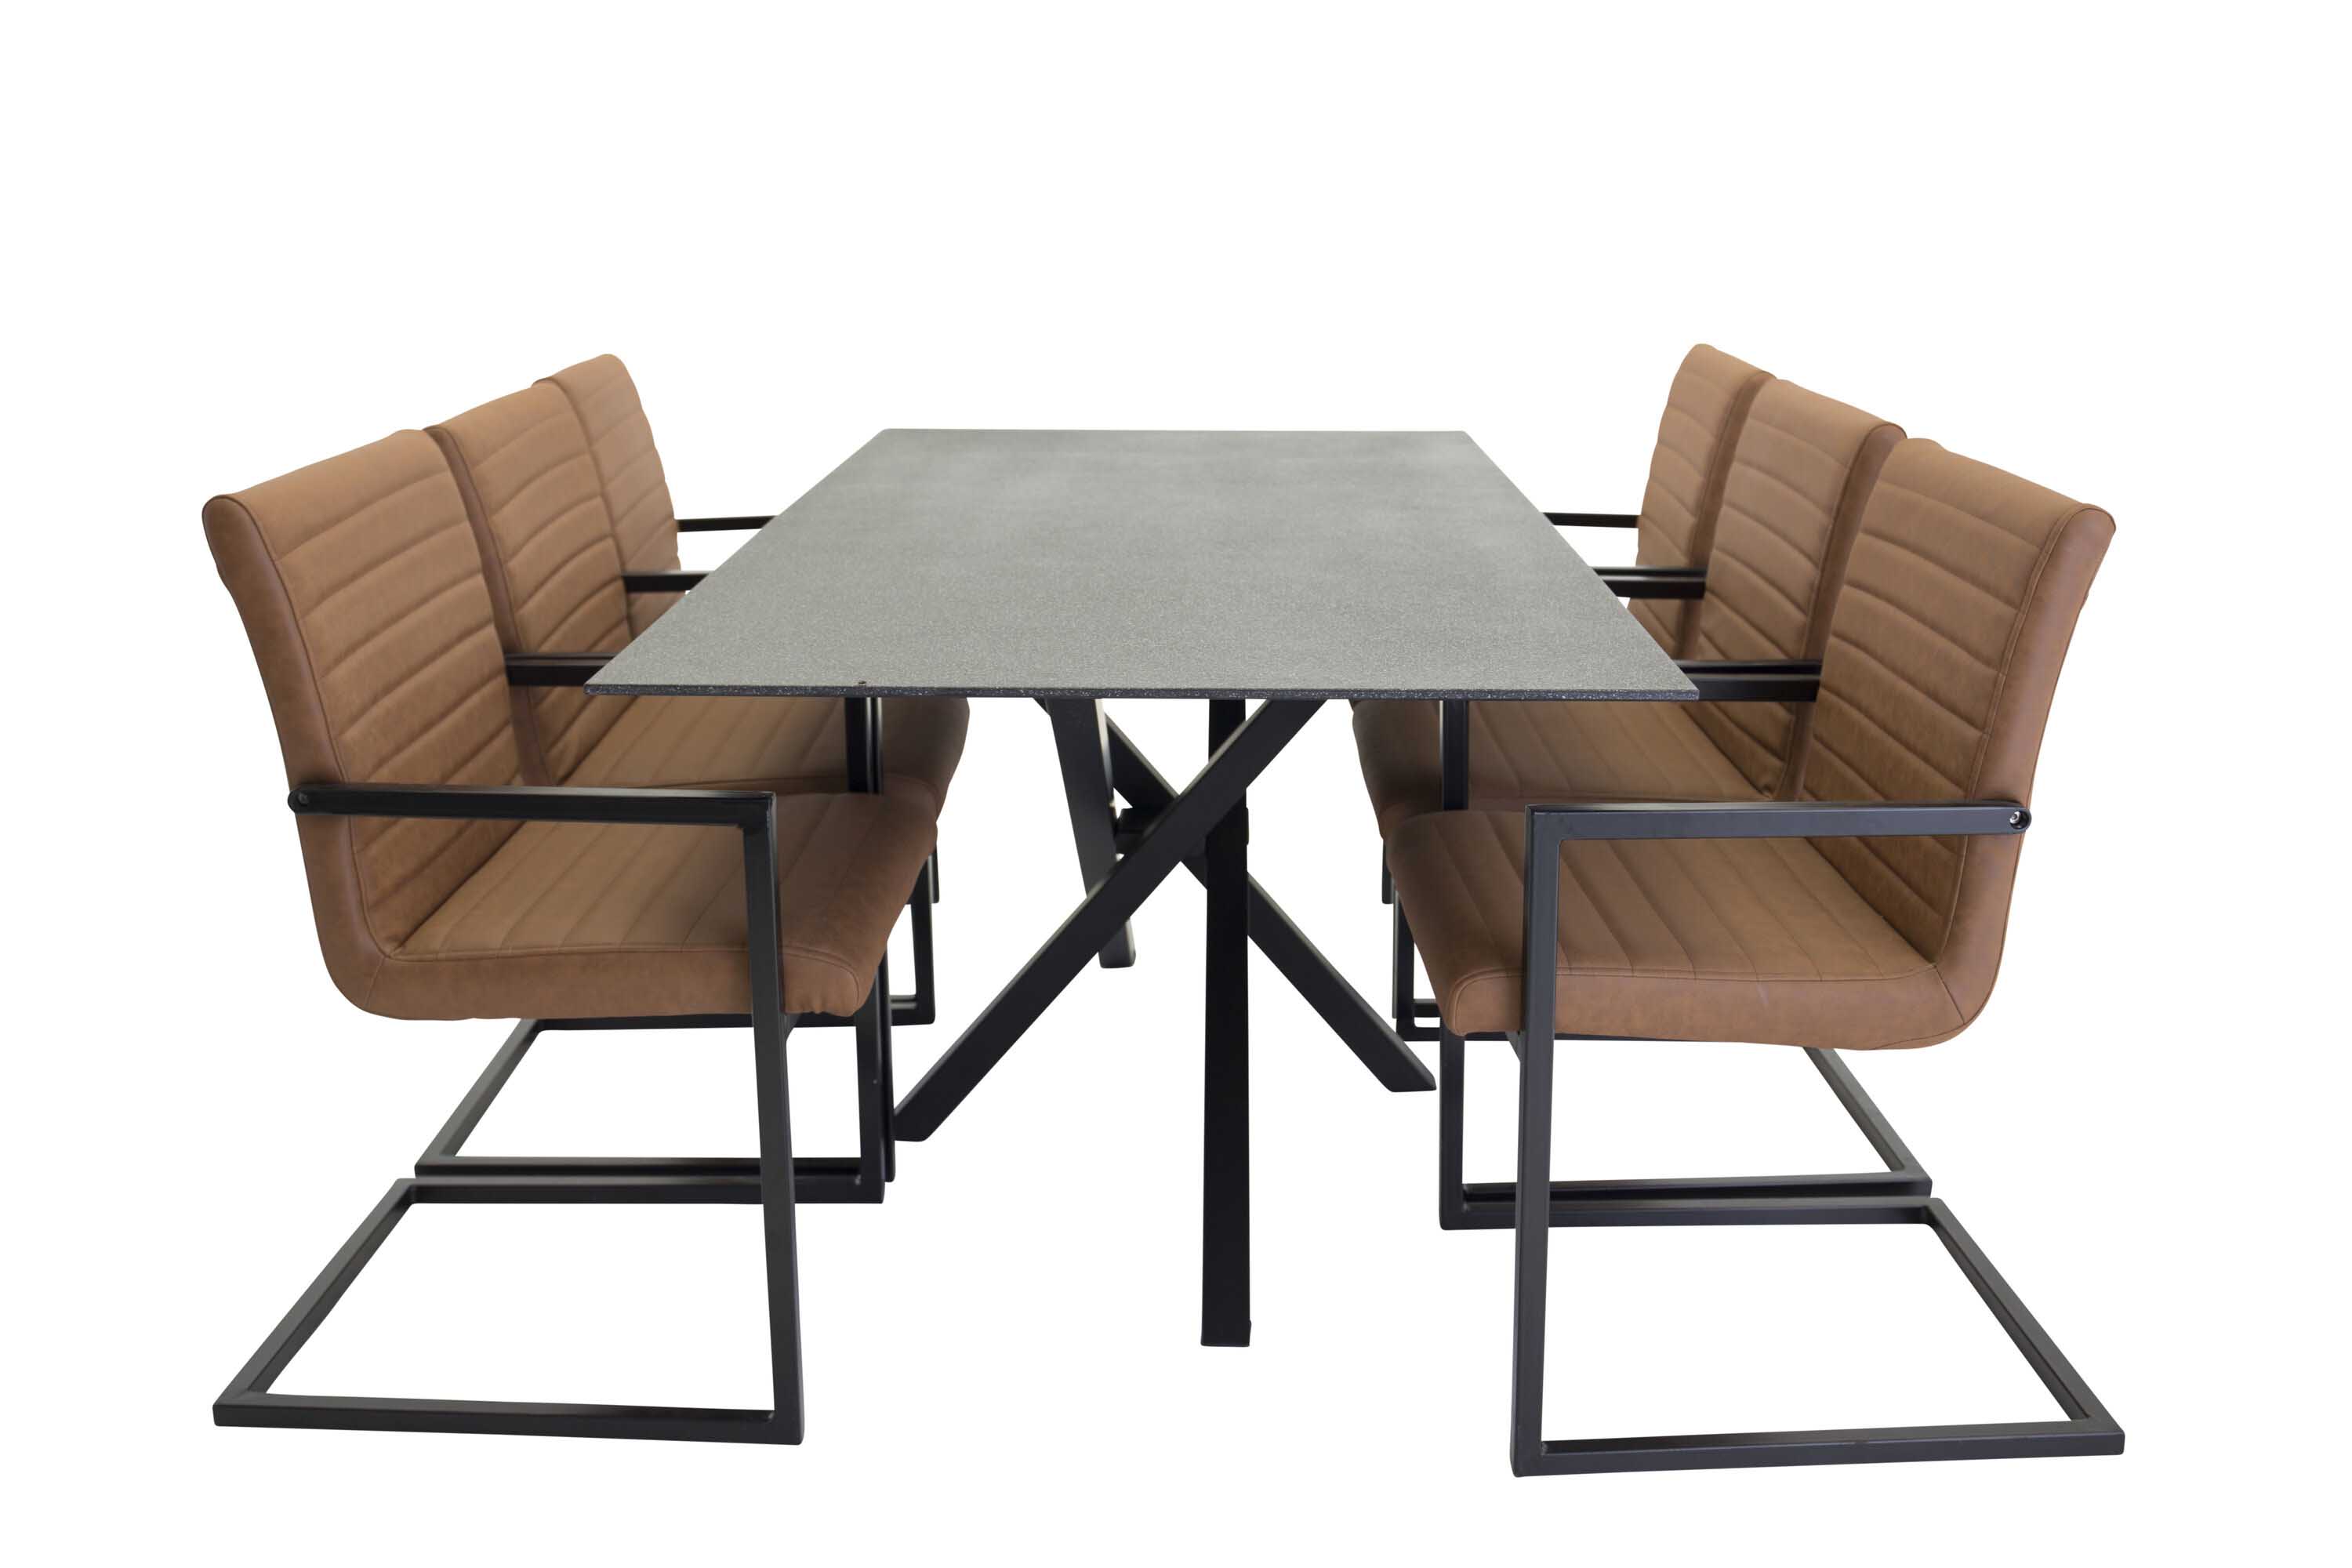 Venture Design Piazza & Art spisebordssæt Grå/sort 6 st stole & borde 180 x 90 cm